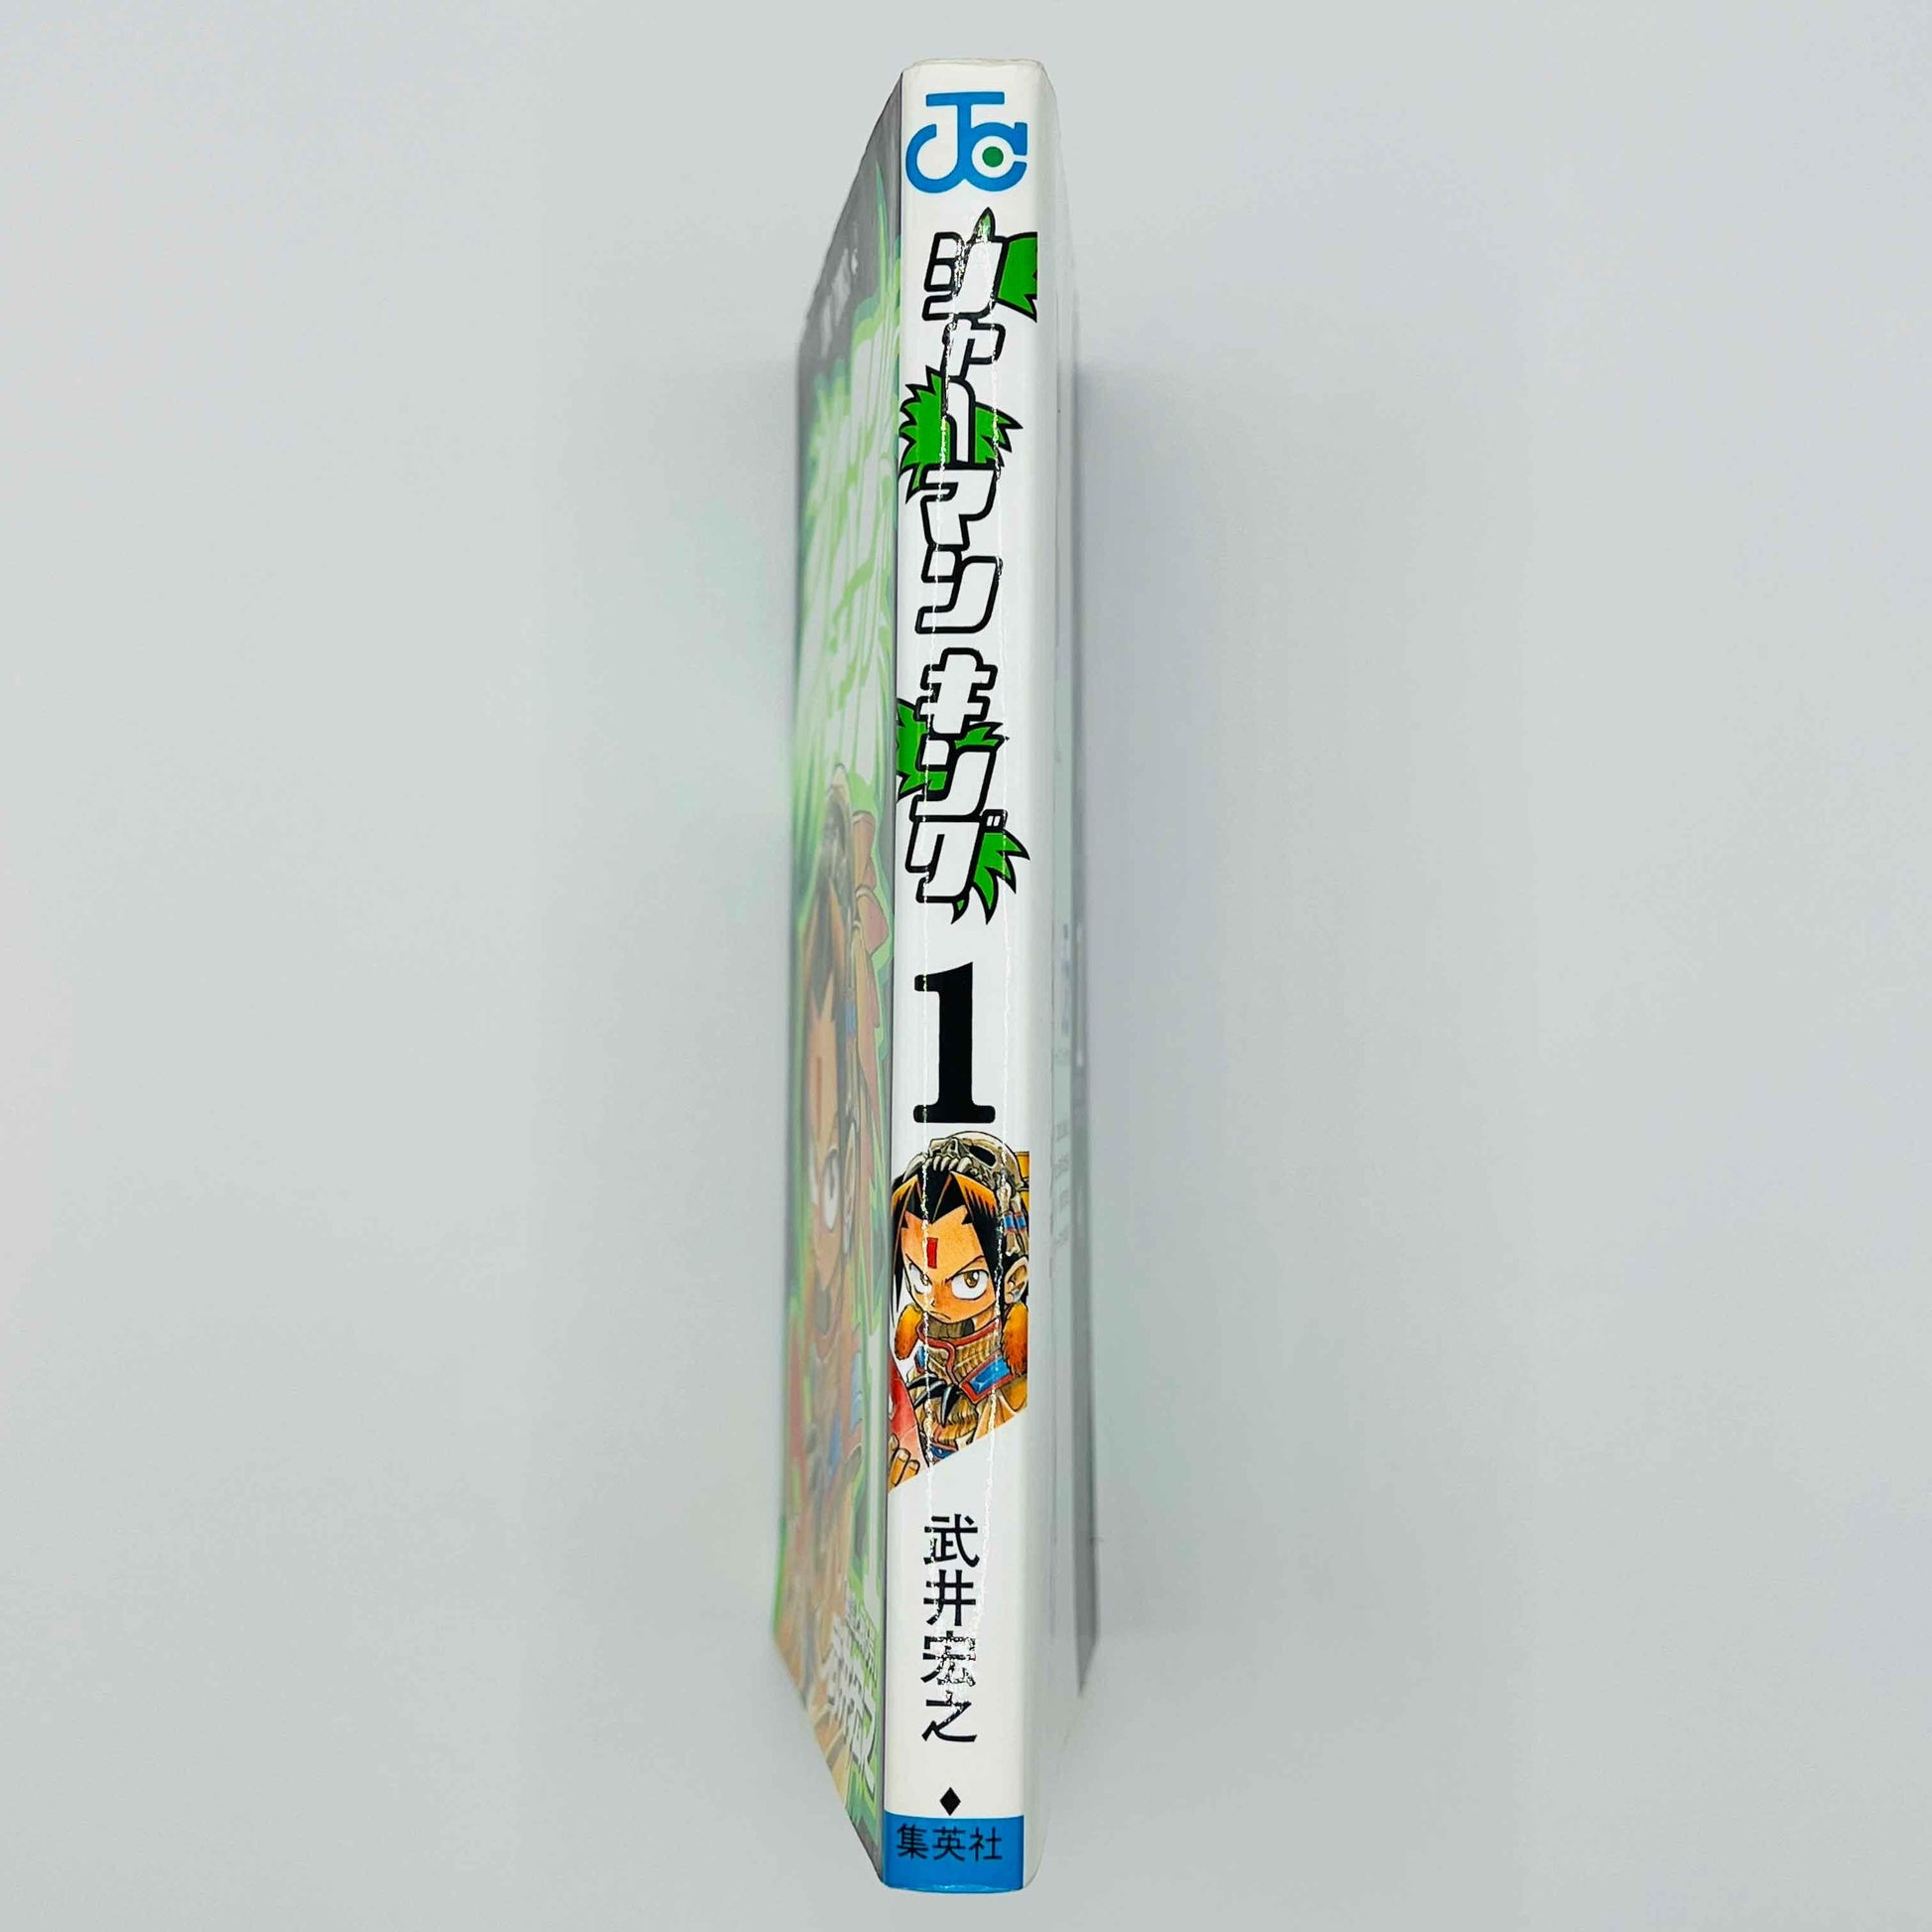 Shaman King - Volume 01 - 1stPrint.net - 1st First Print Edition Manga Store - M-SK-01-003